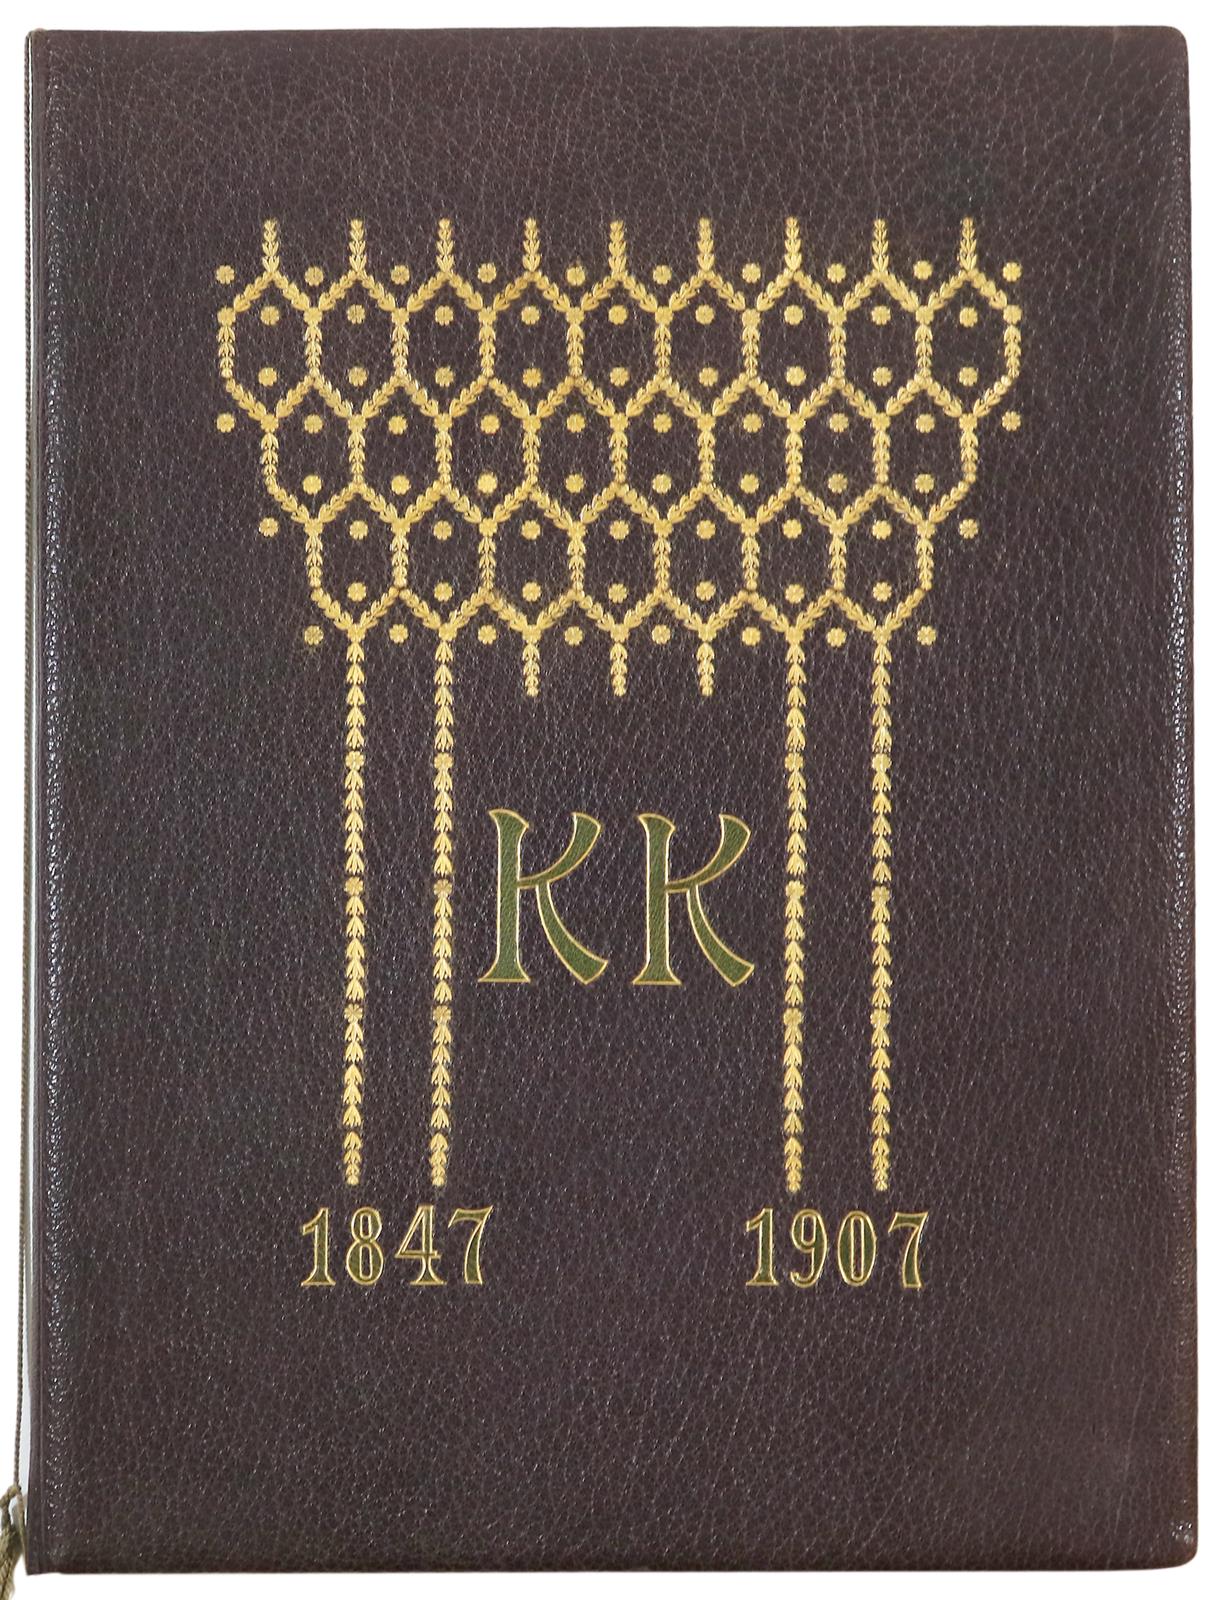 KK (Karl Kloß) 1847-1907 | Bild Nr.1